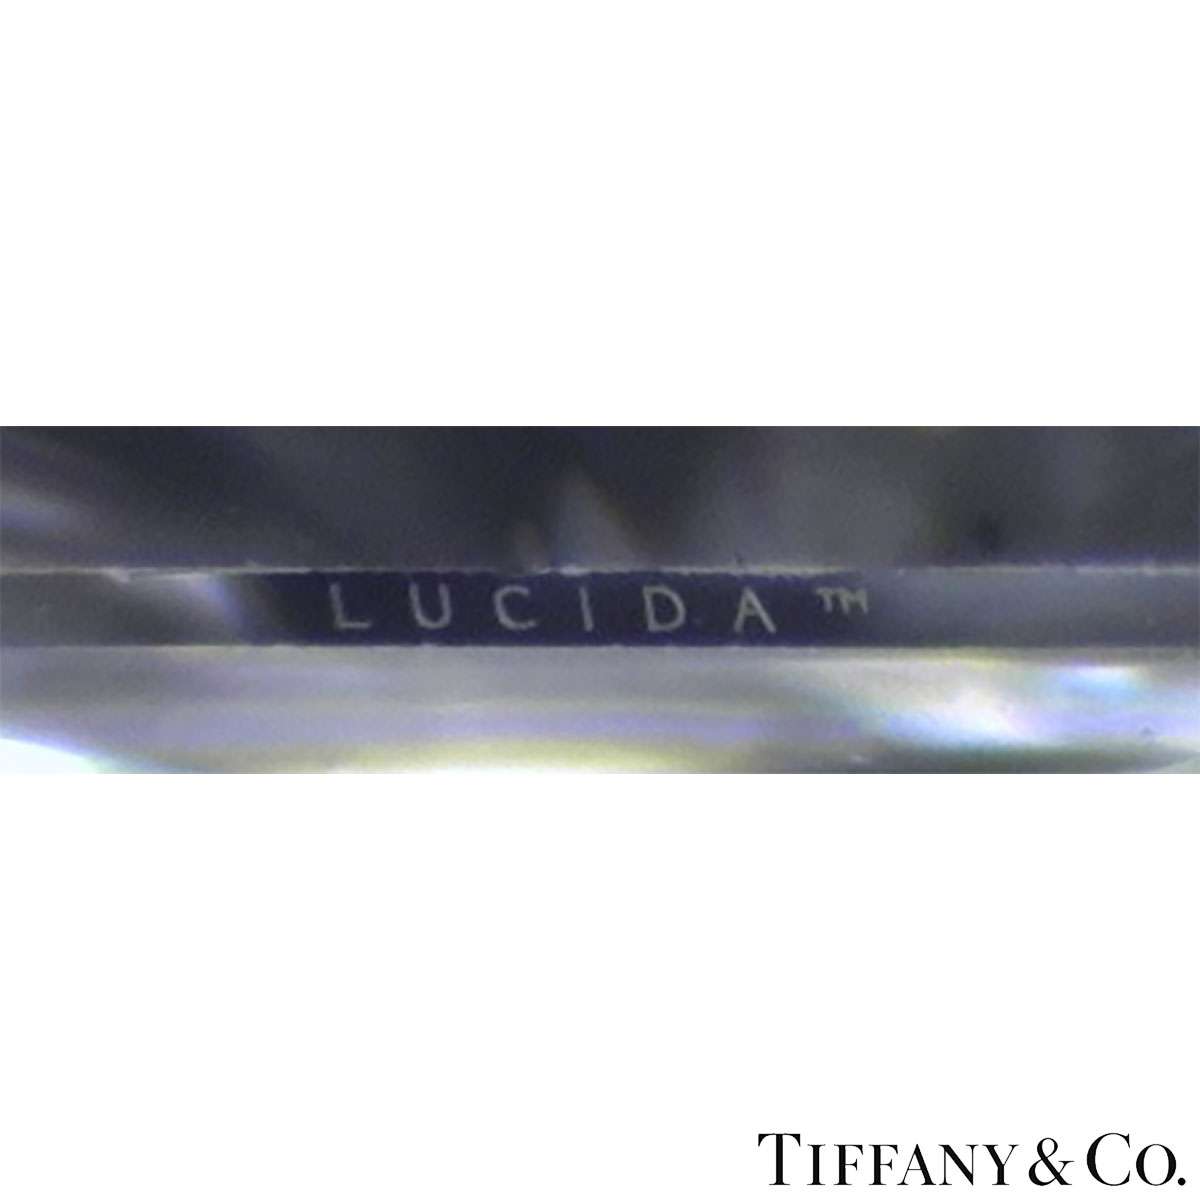 Tiffany & Co. Lucida Cut Diamond Ring 1.27ct E/VS1